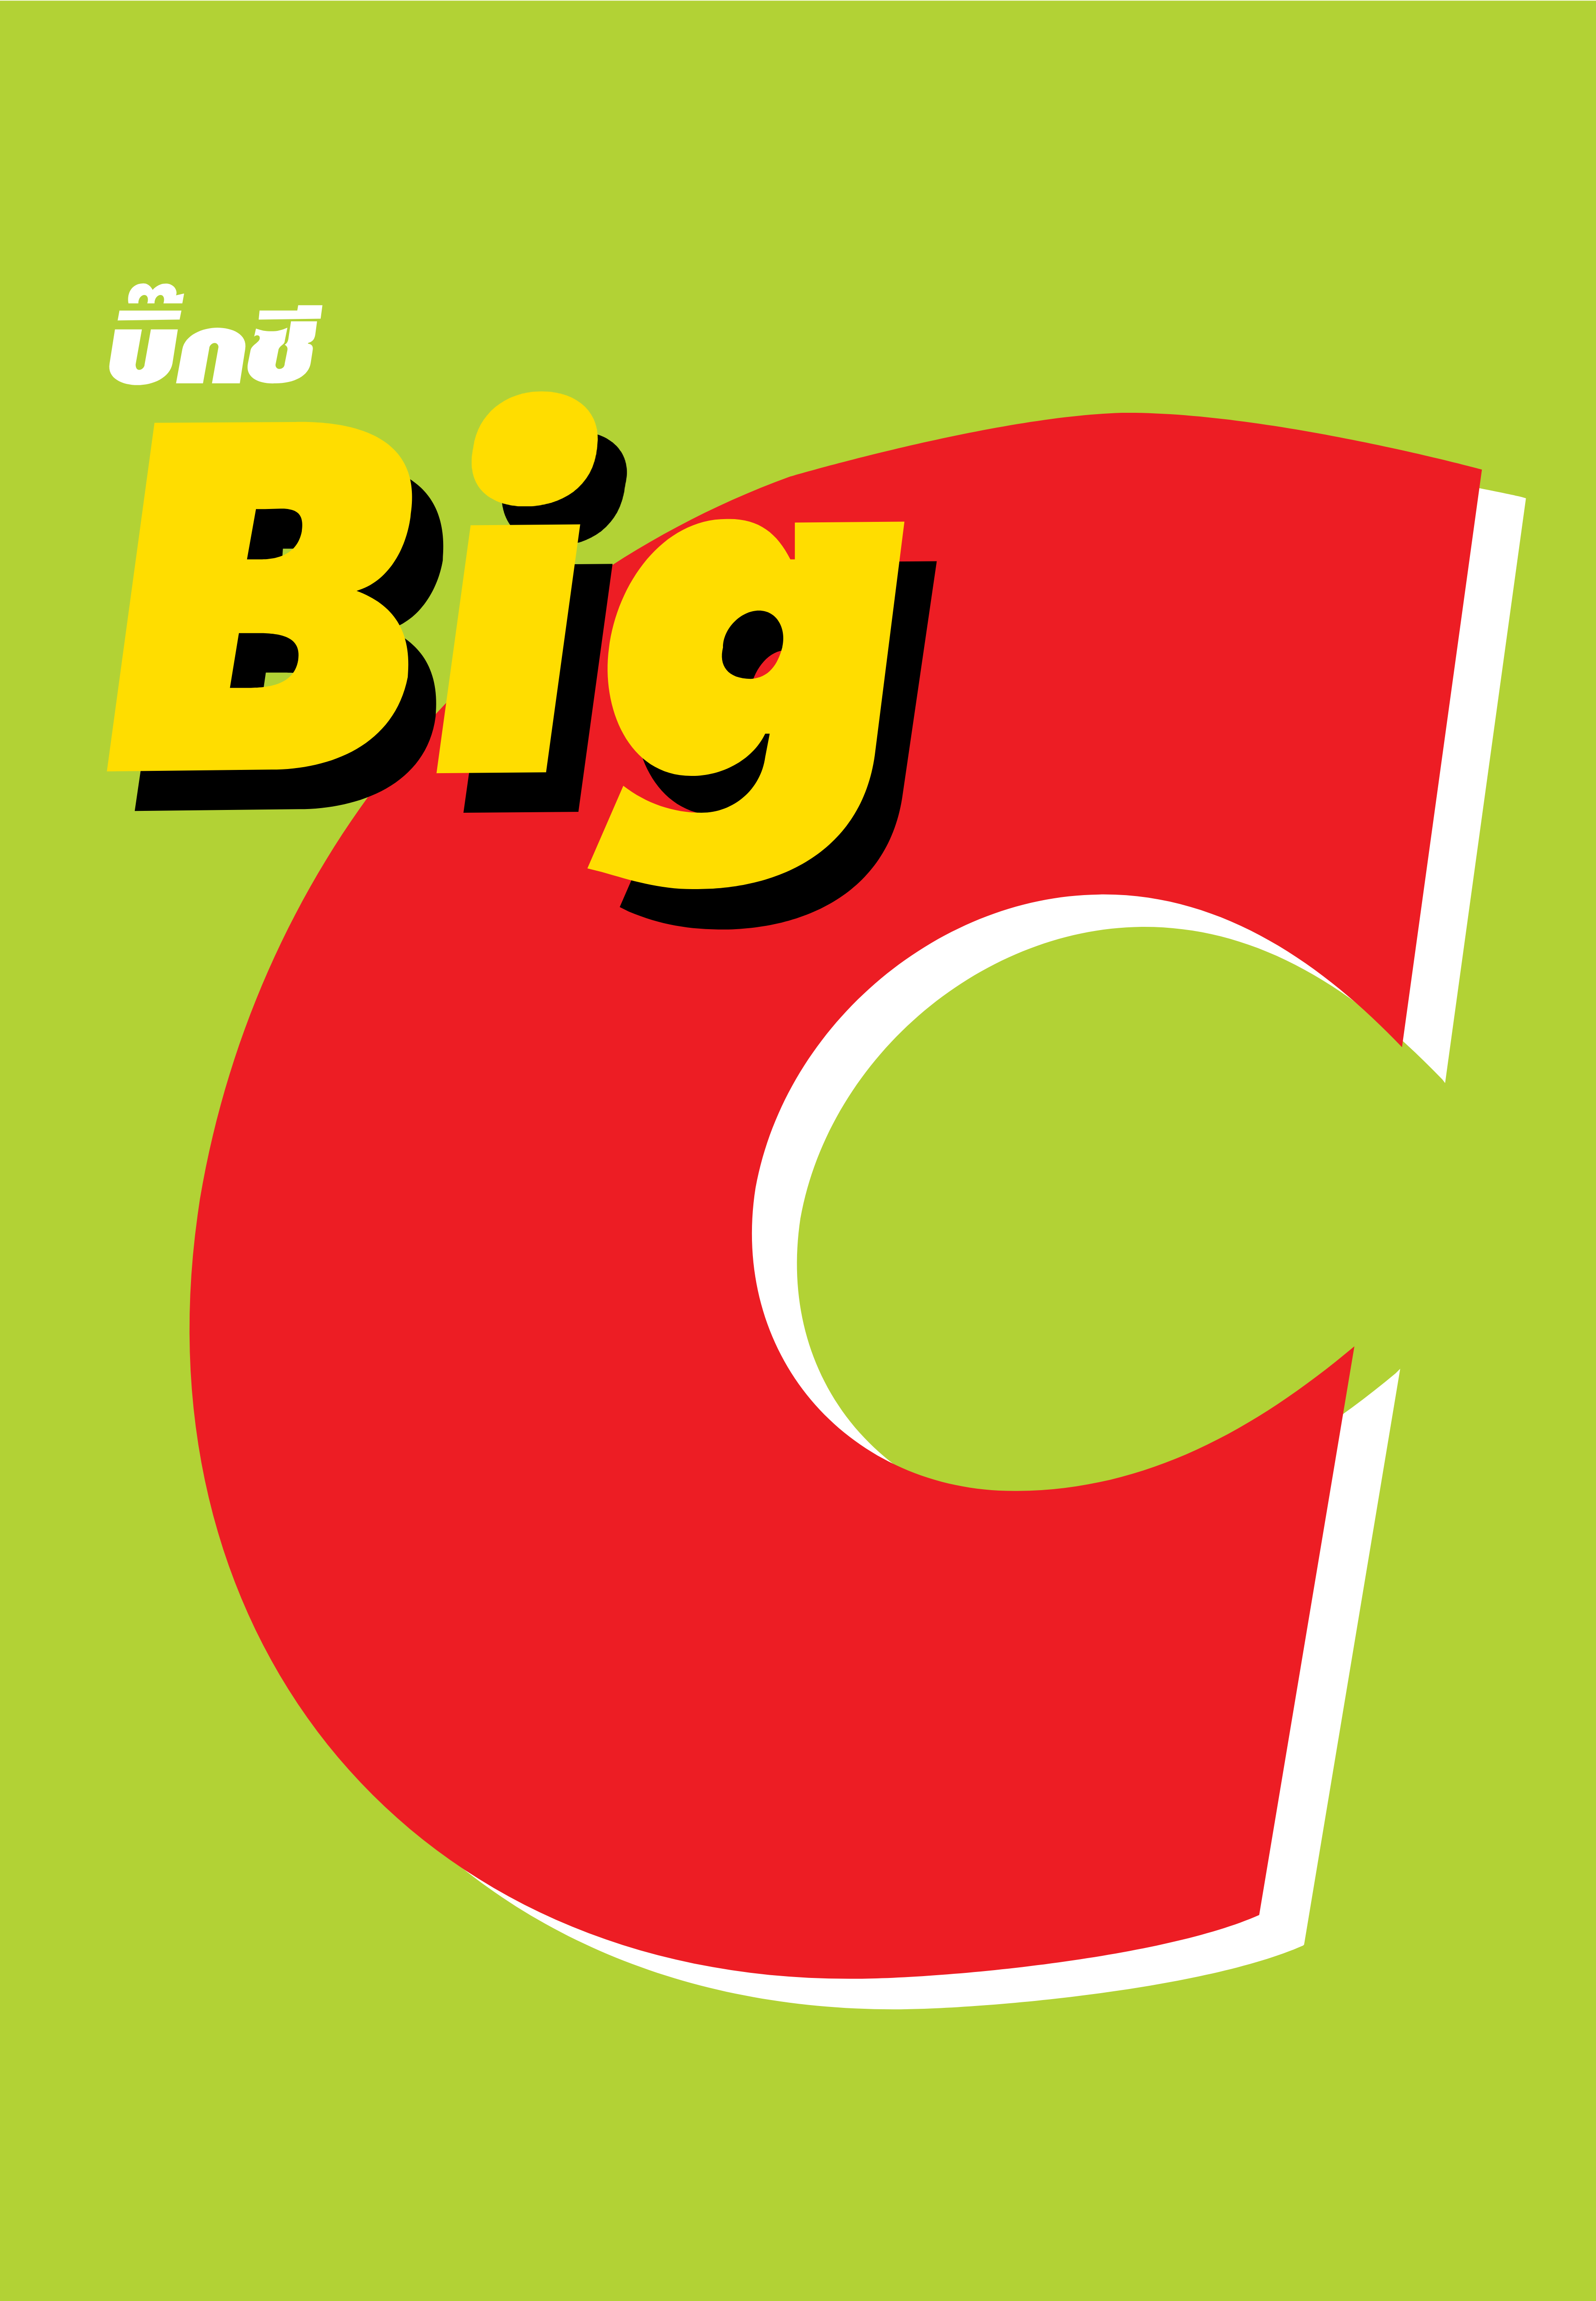 Big C – Logos Download